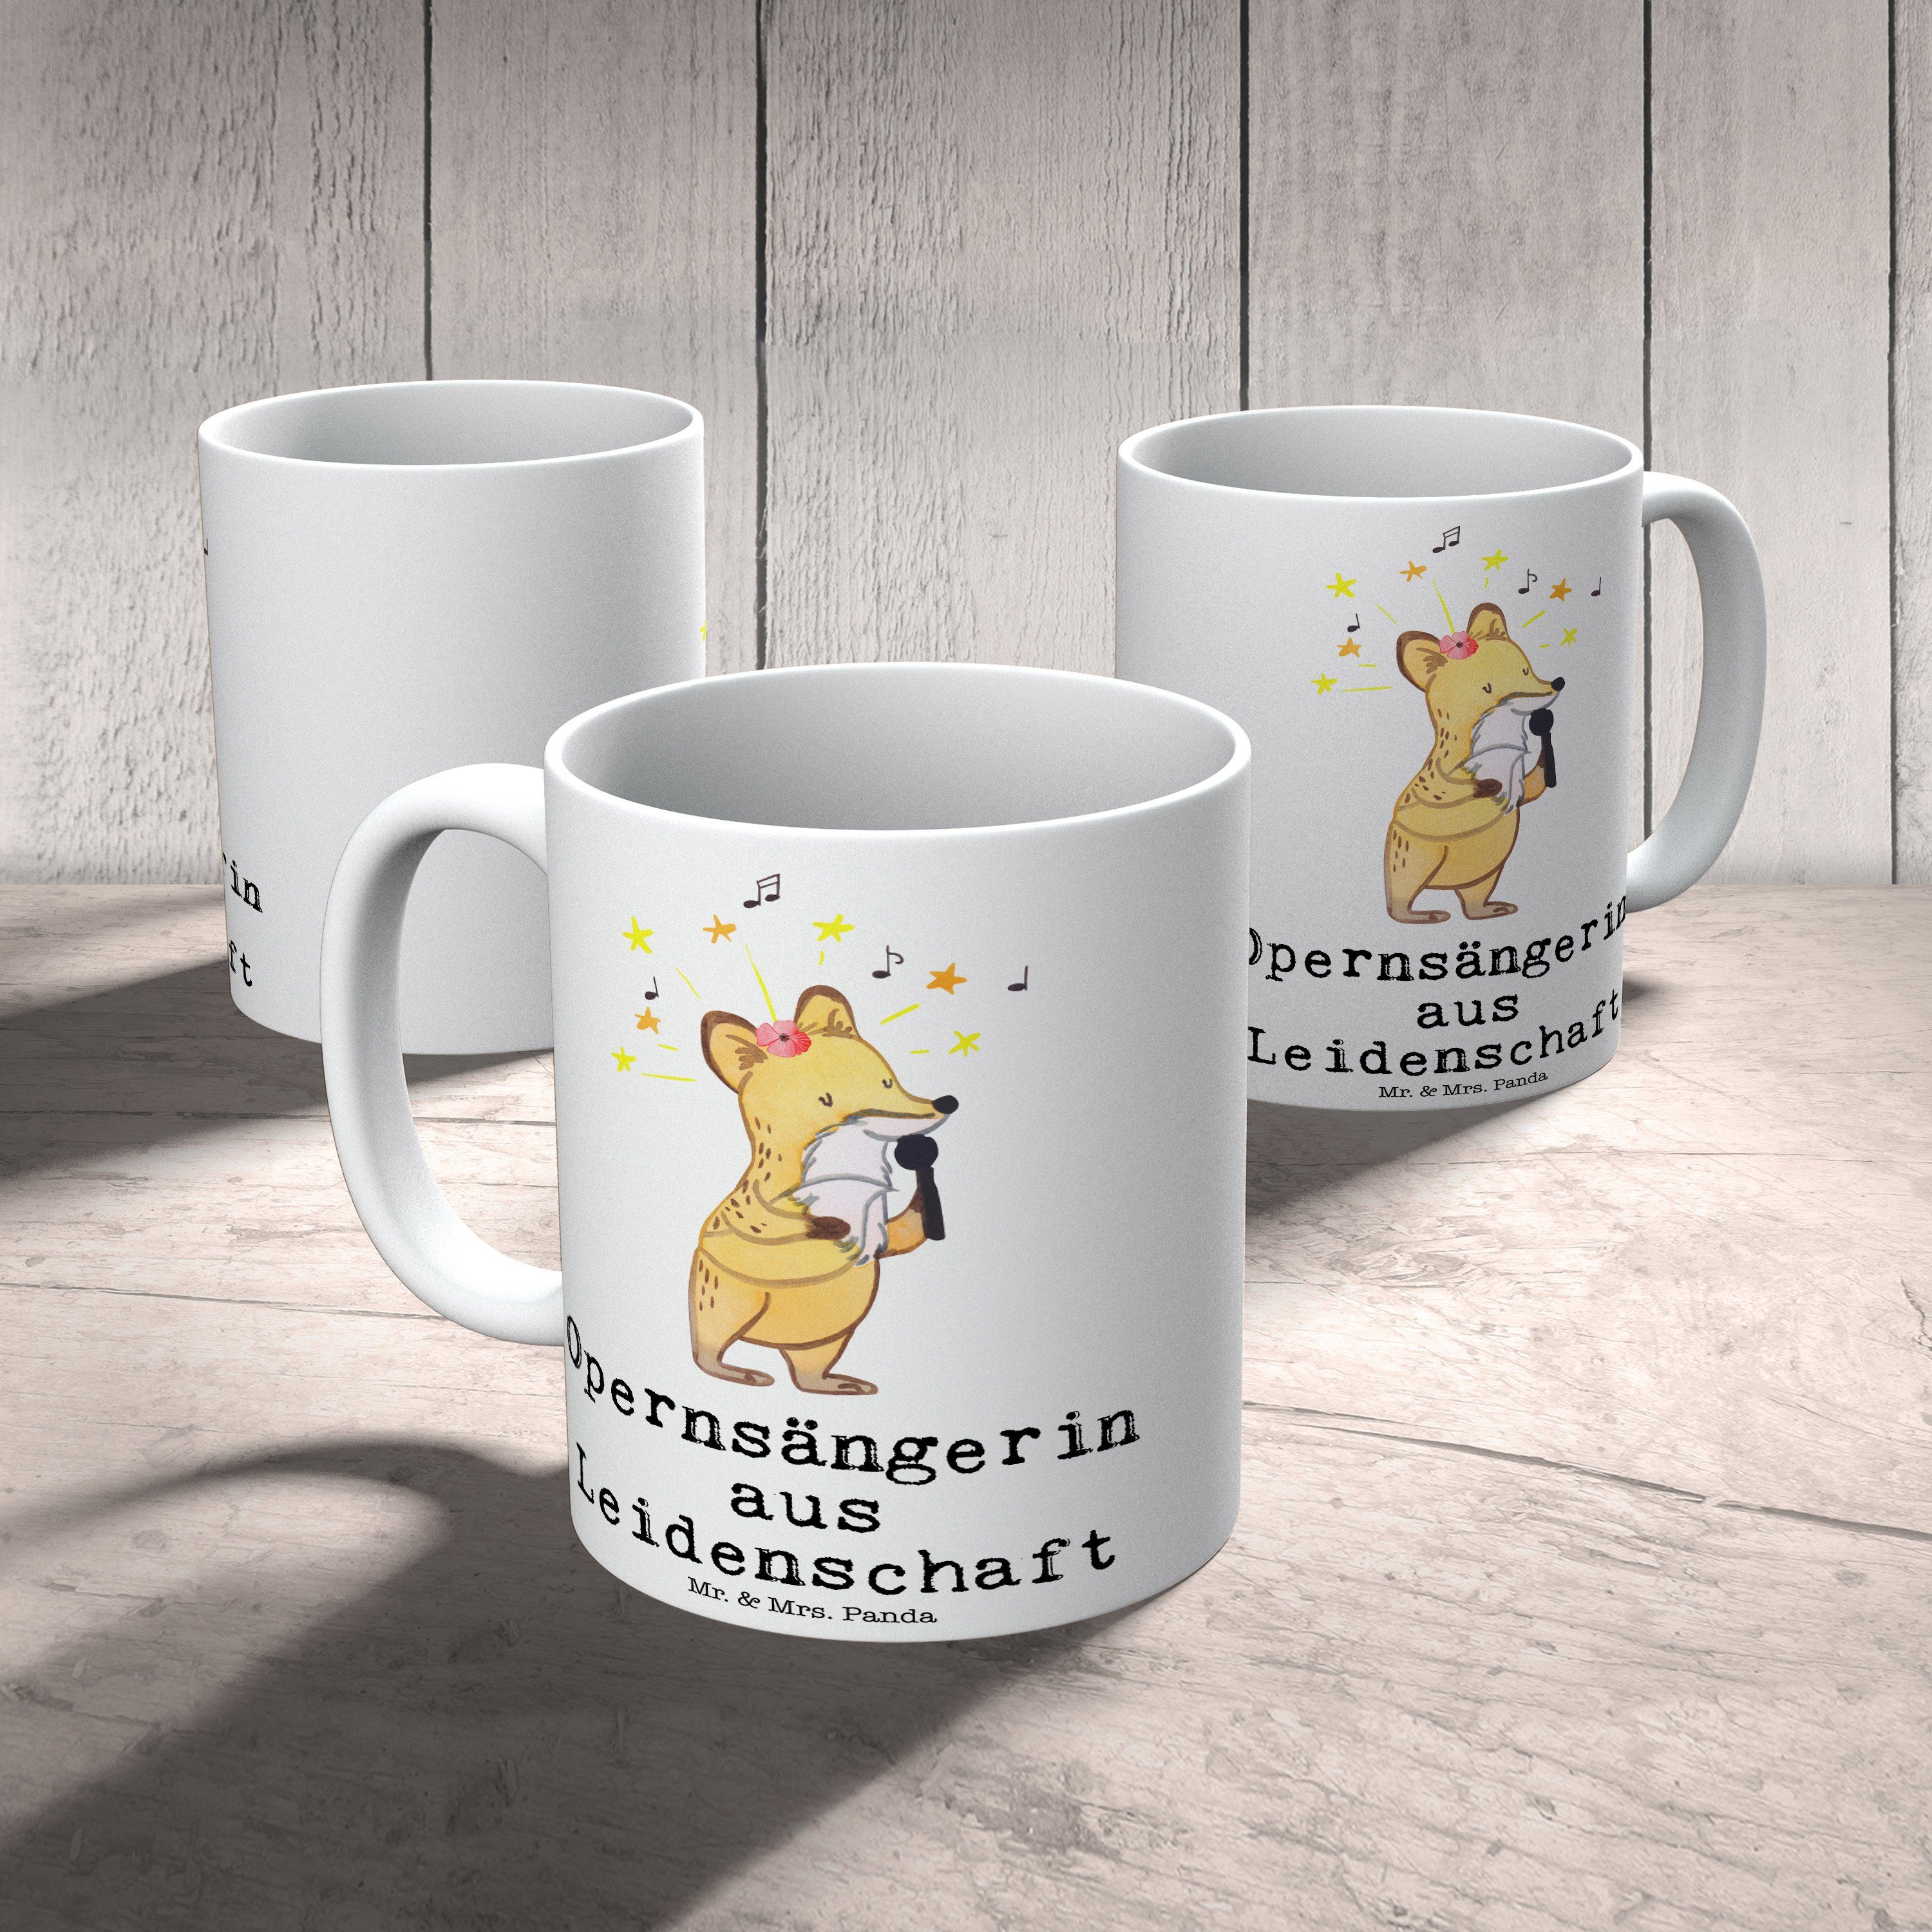 Mr. & Mrs. Panda Leidenschaft Keramik - Tasse aus Geschenk, - Weiß Danke, Opernsängerin Ausbildung